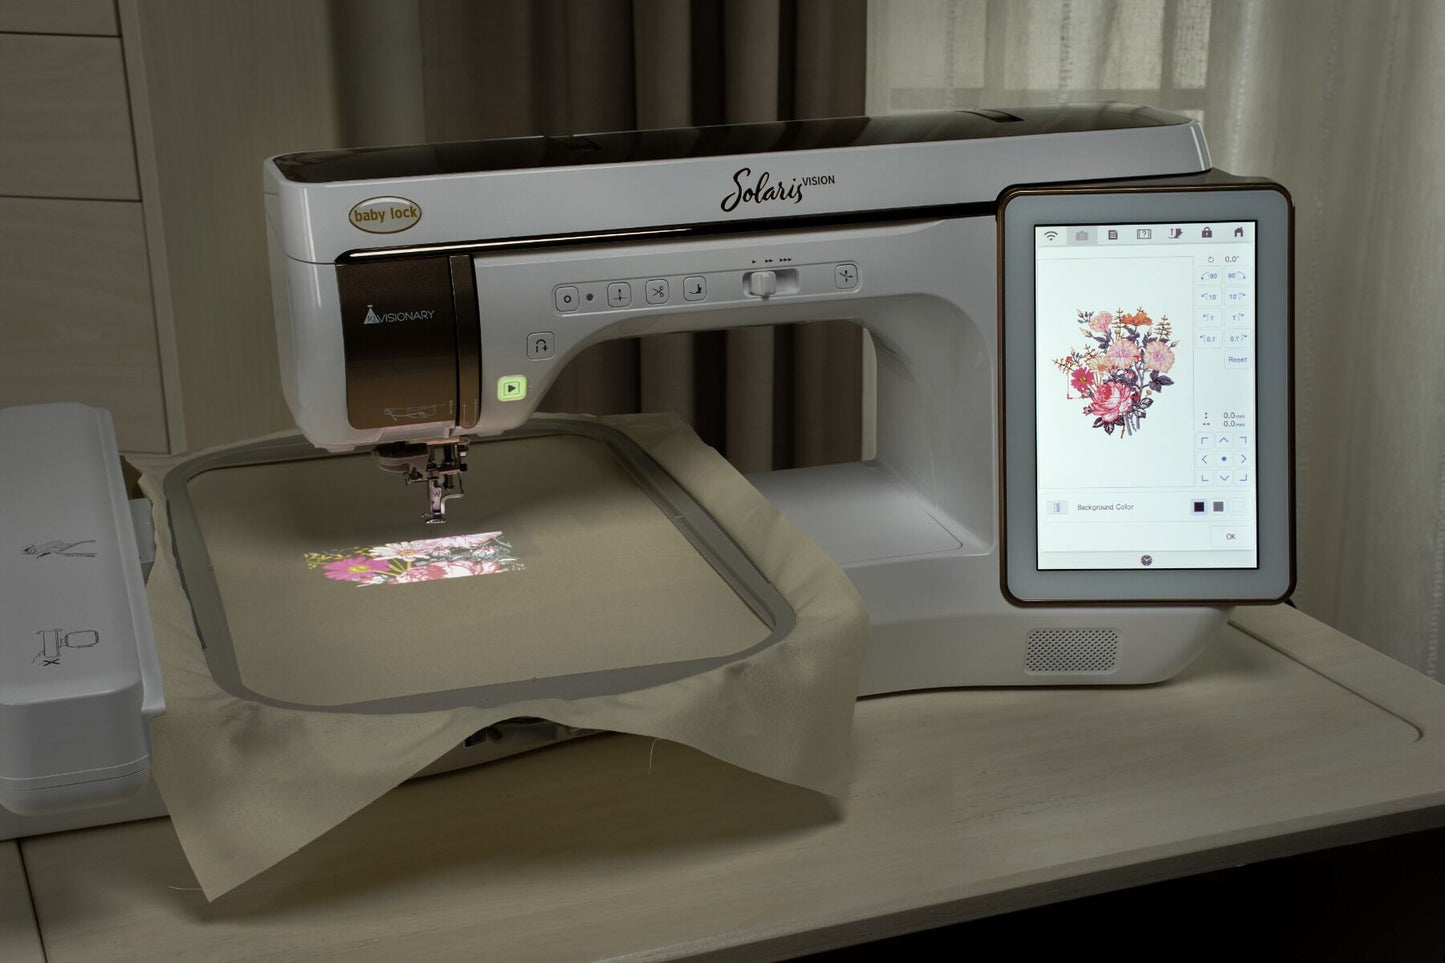 Baby Lock Solaris Vision Sewing, Quilting & Embroidery Machine - with FREE Gifts (BQ3422-BLSA3PO + BLMTXL-BK + BA-LOK60D + ECS11)